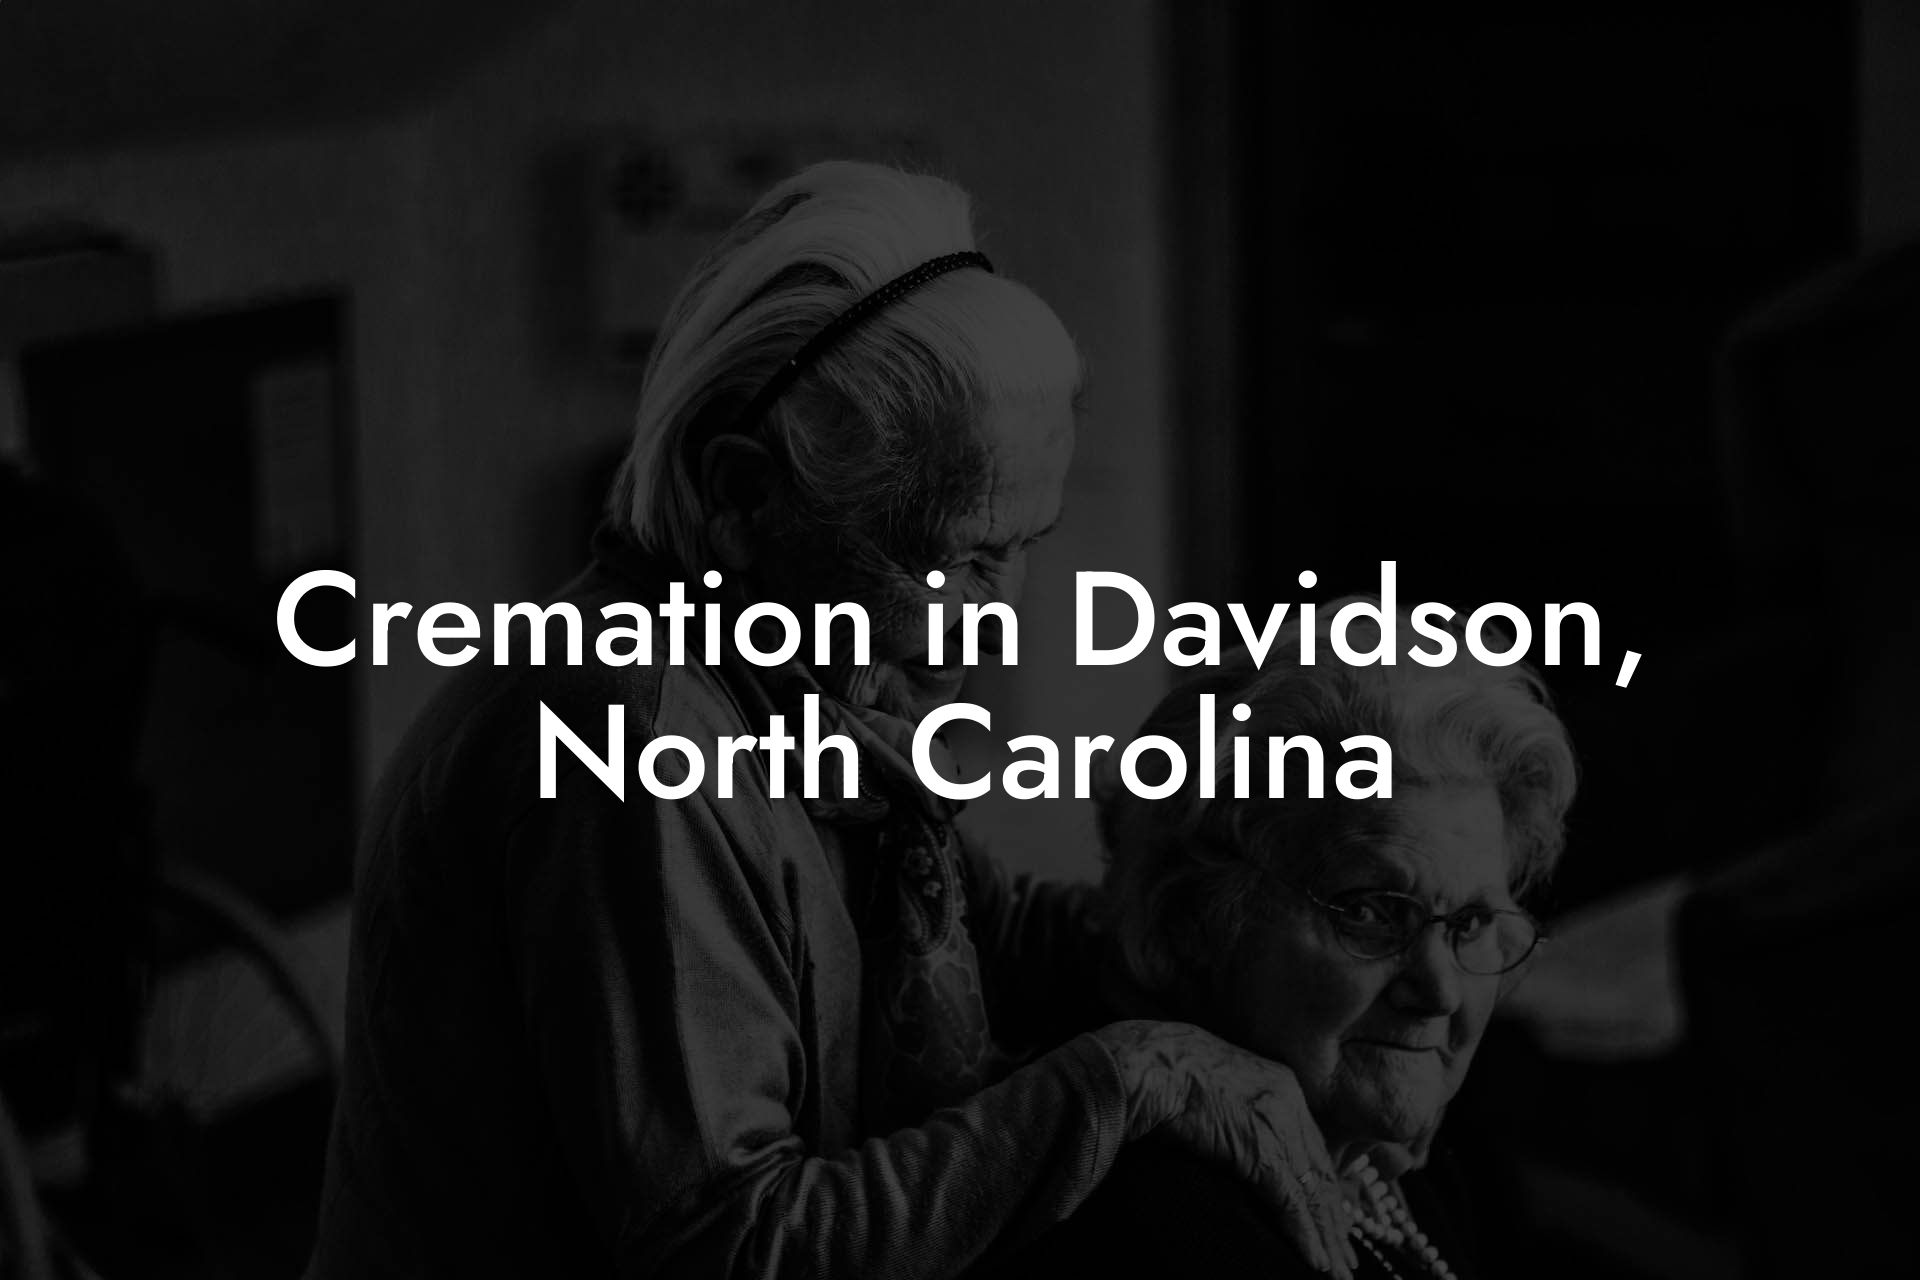 Cremation in Davidson, North Carolina